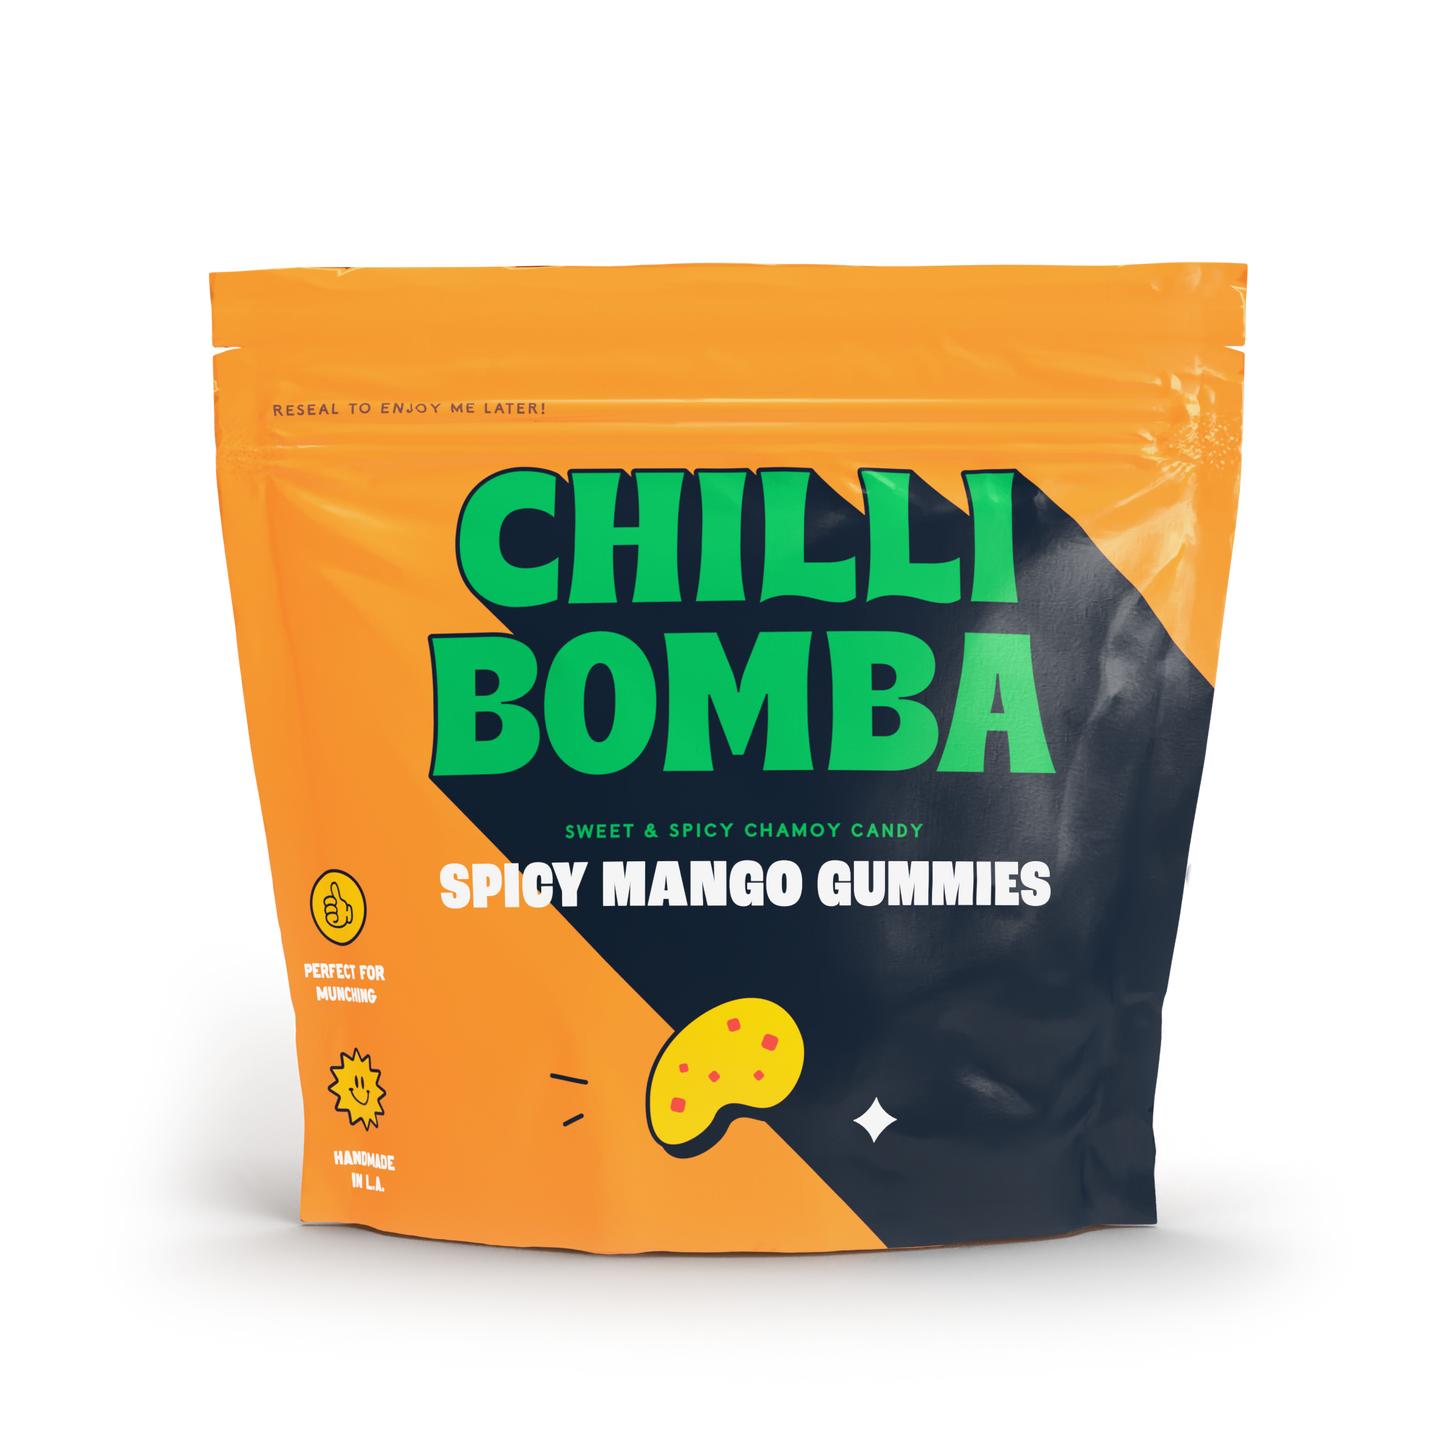 Chilli Bomba Spicy Mango Gummies 8oz